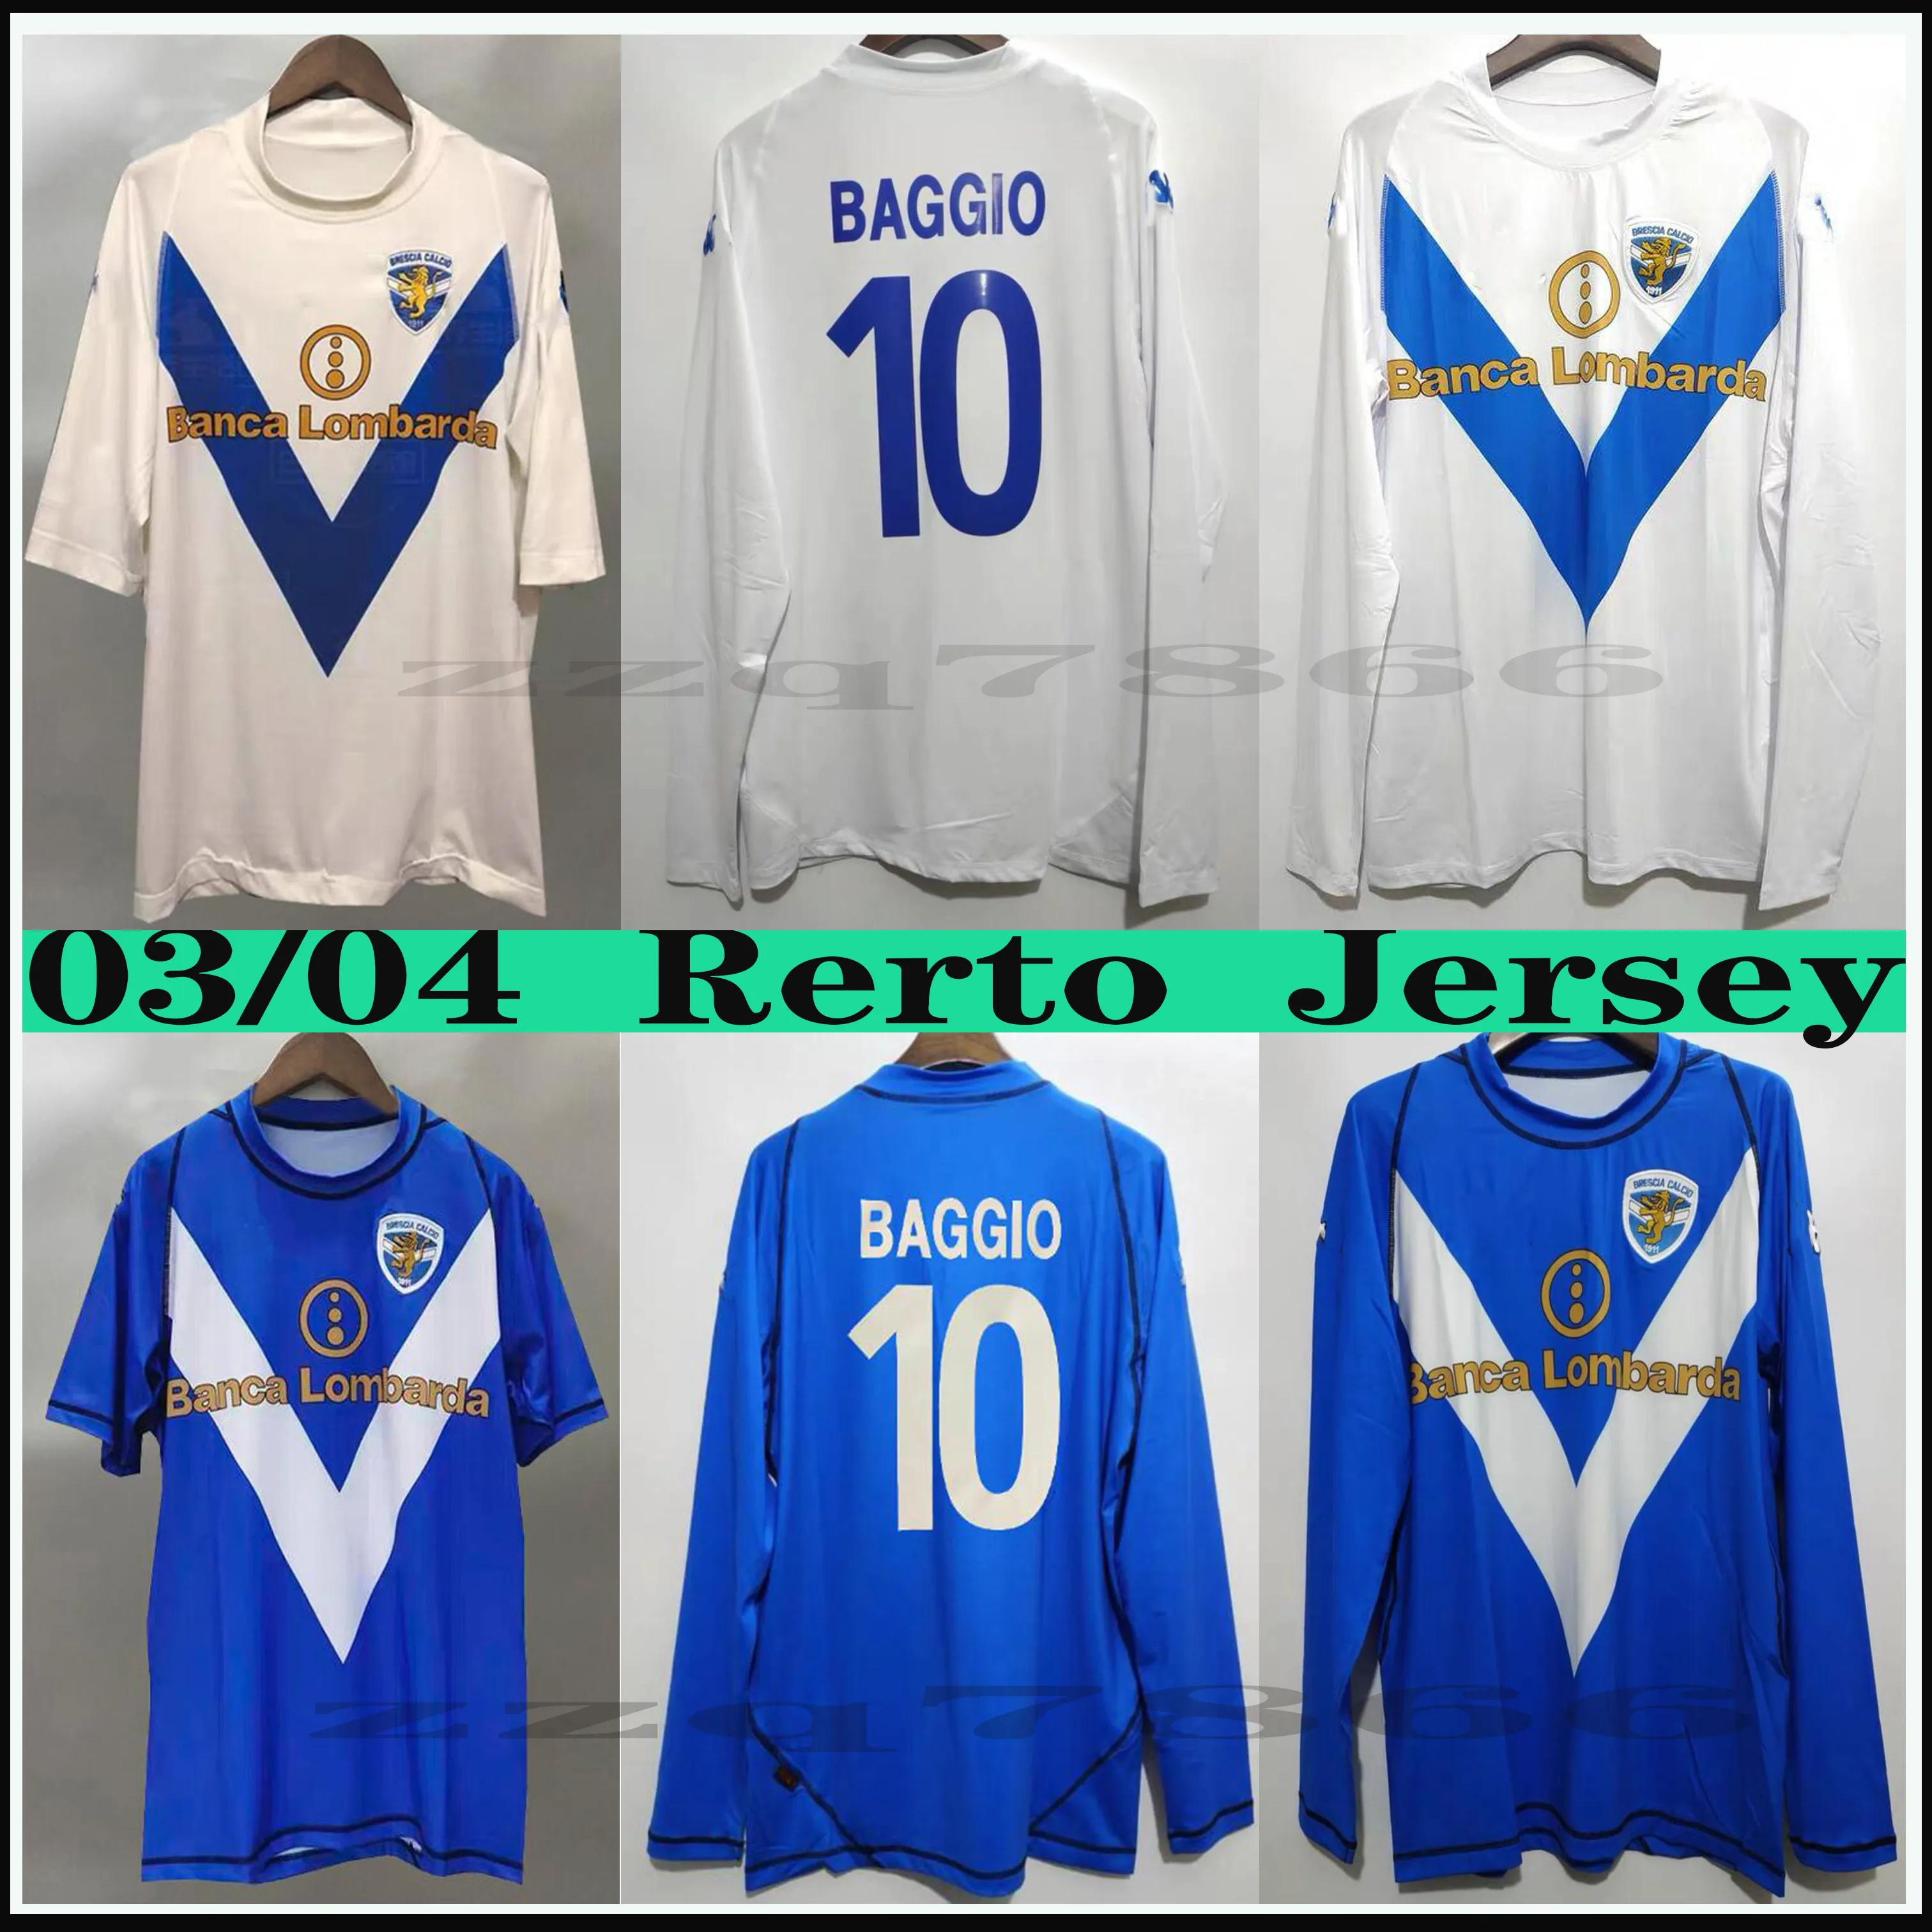 2003 2004 Brescia Baggio Pirlo Retro Soccer jersey Classic Vintage Calcio F.Aye Donnarumma Spalek Long sleeve Short football shirts